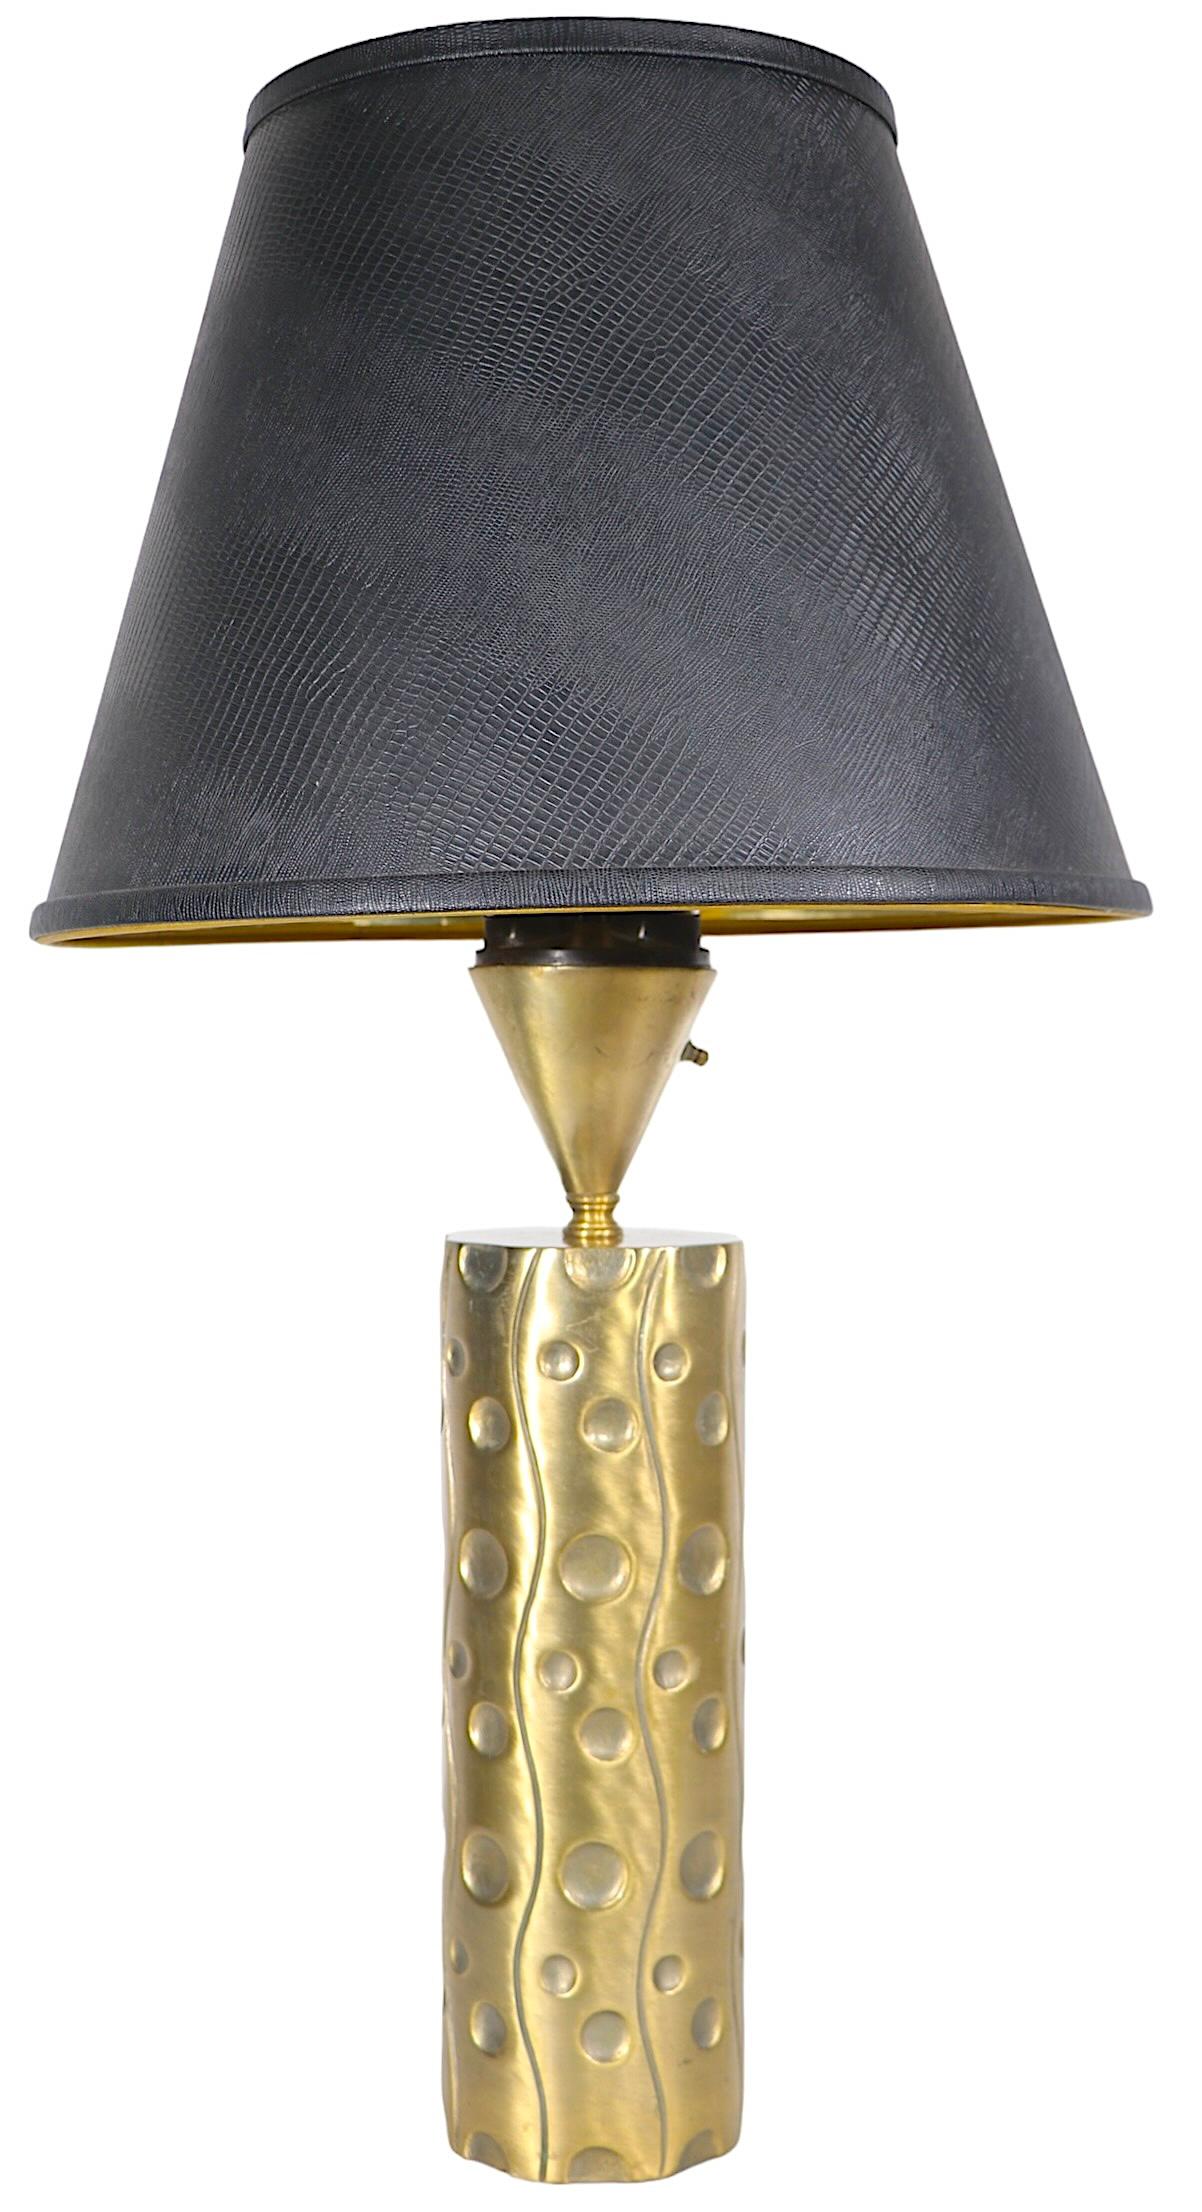 Metal  Westwood Table Lamp att. Tony Paul c. 1950/1970's  For Sale